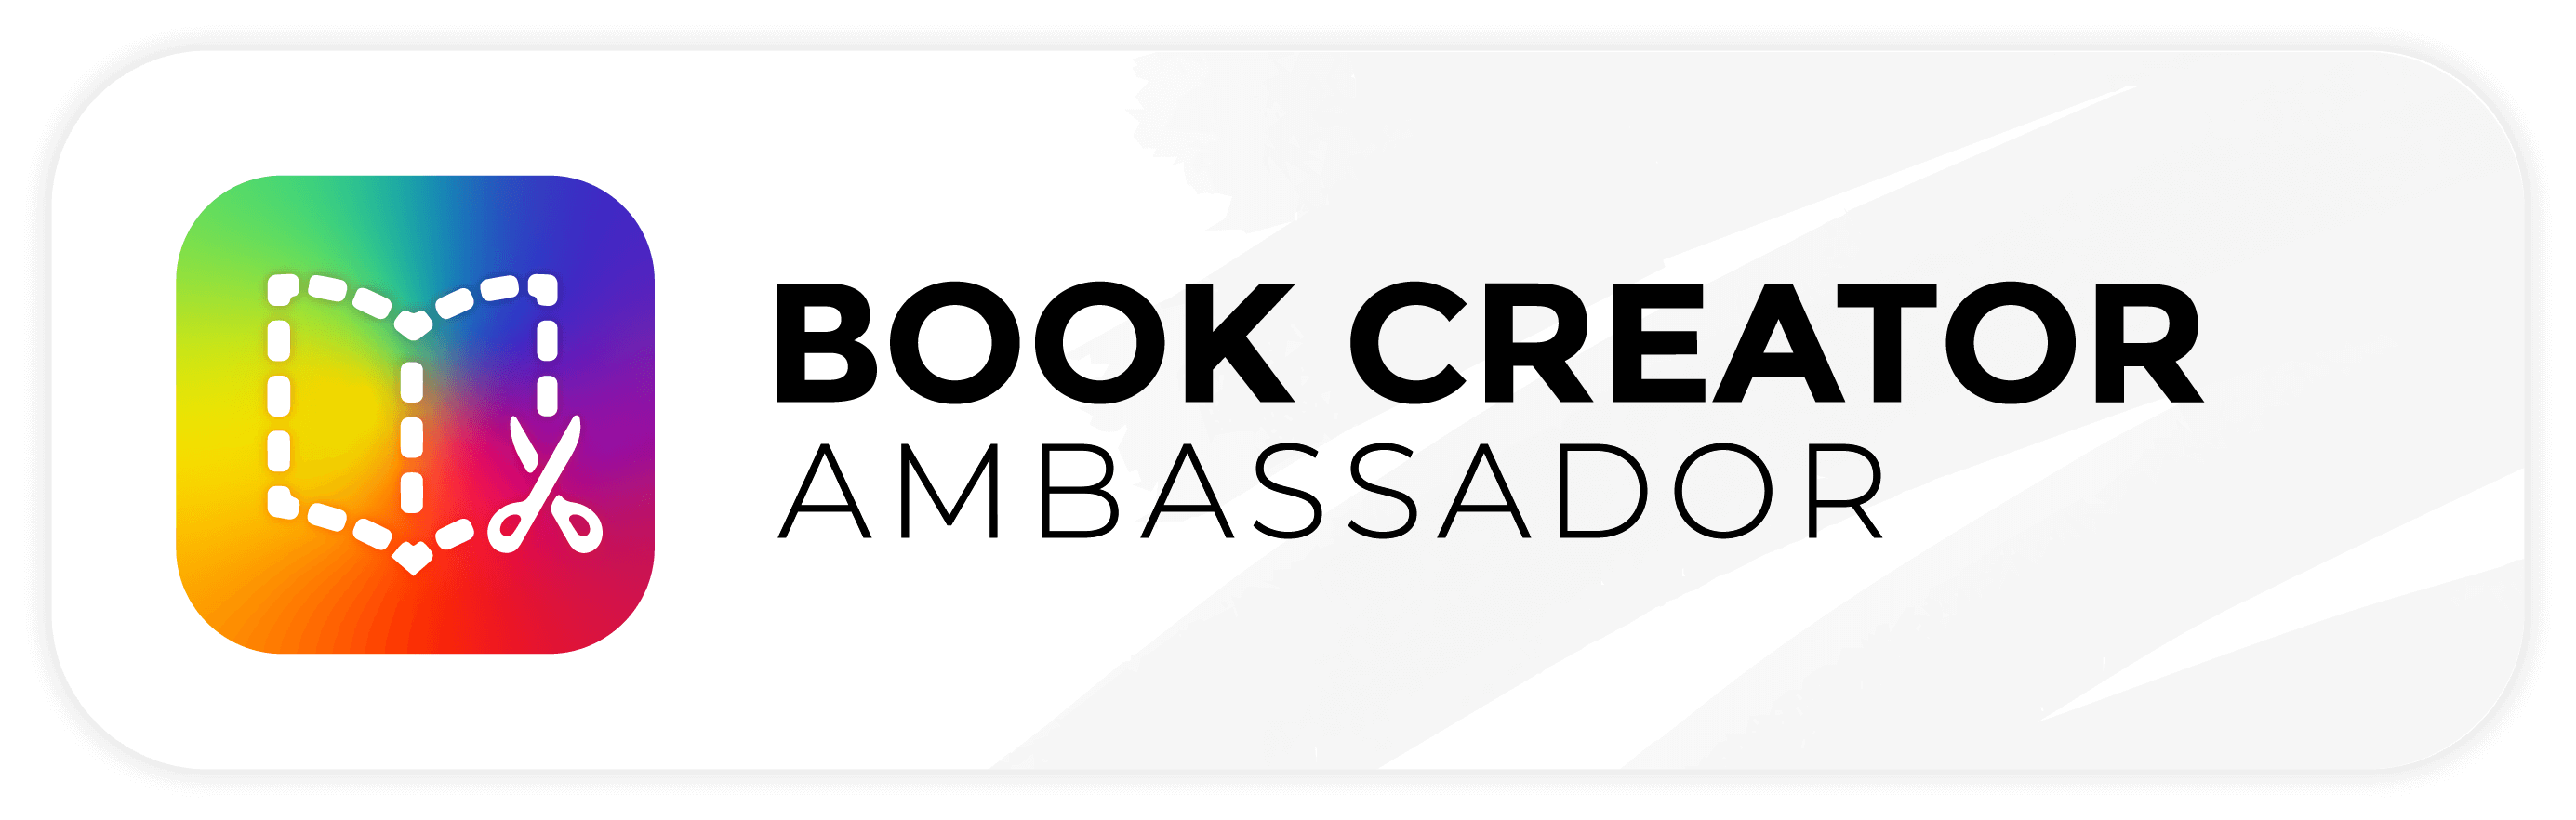 Book Creator Ambassador badge